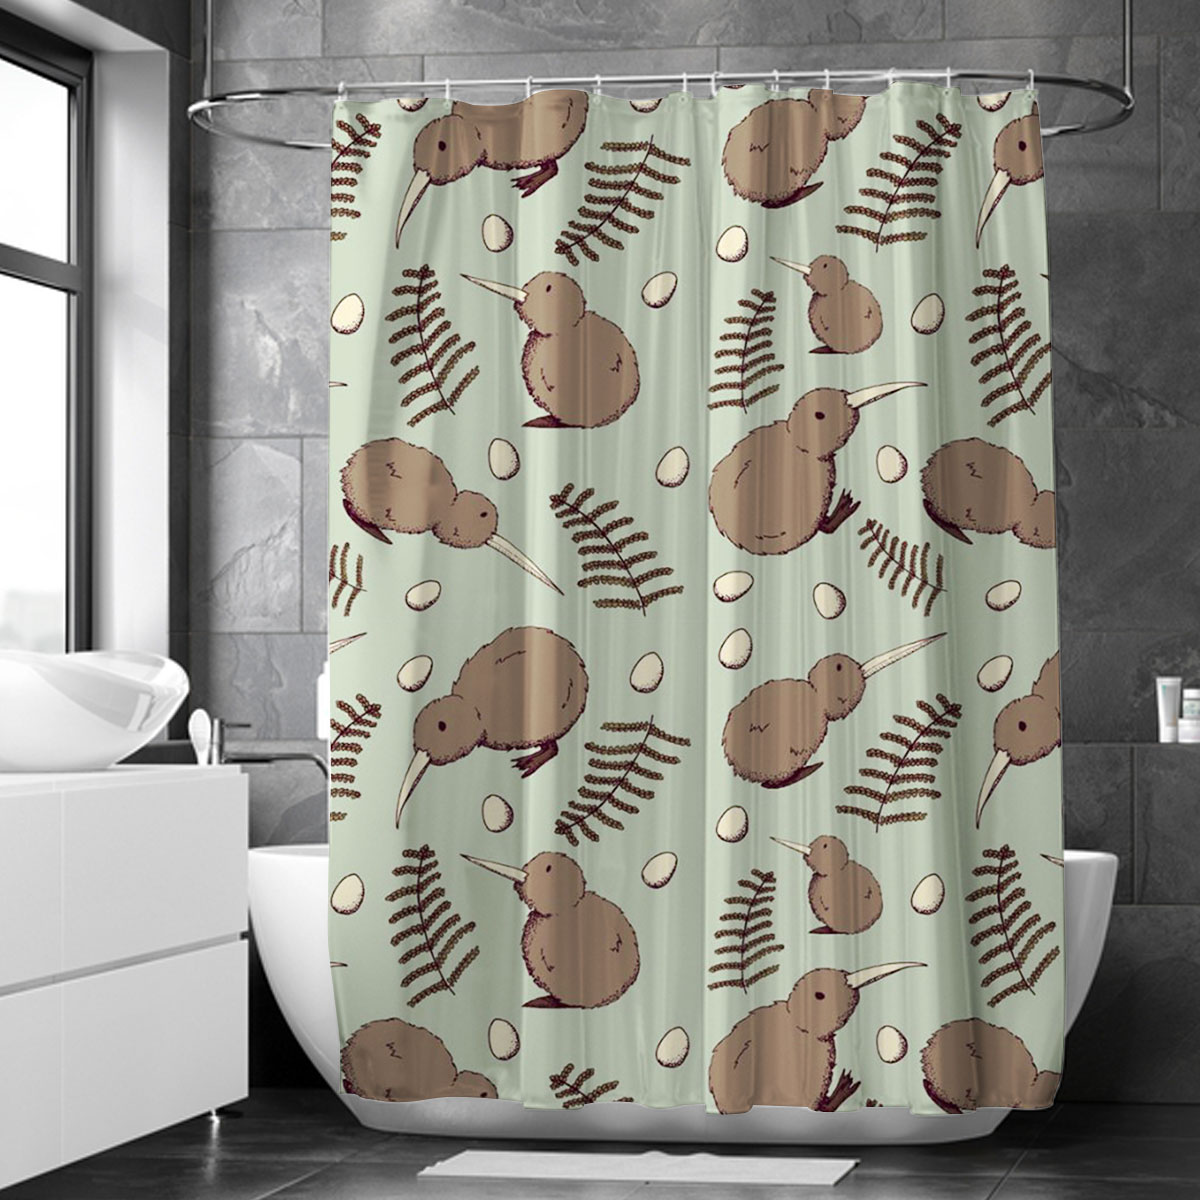 Big And Small Kiwi Bird Shower Curtain 6